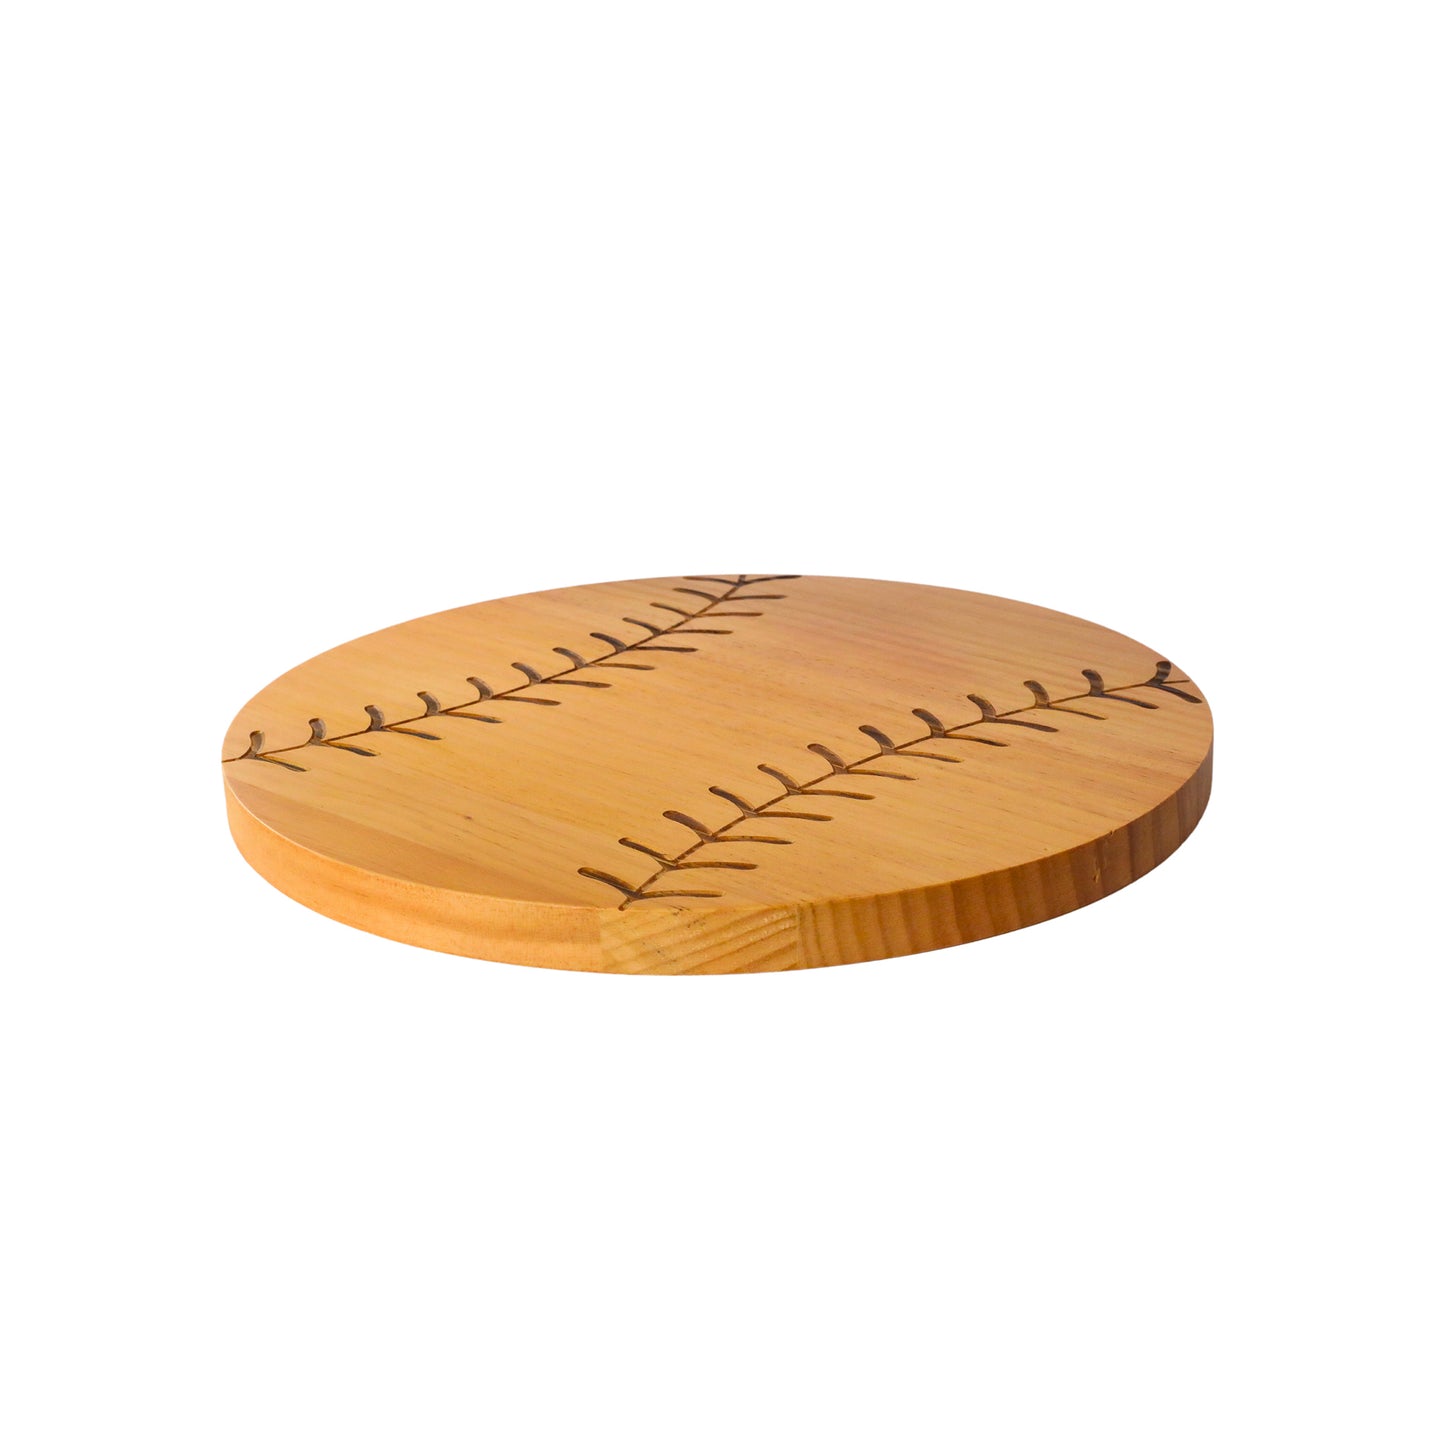 Baseball Wood Board